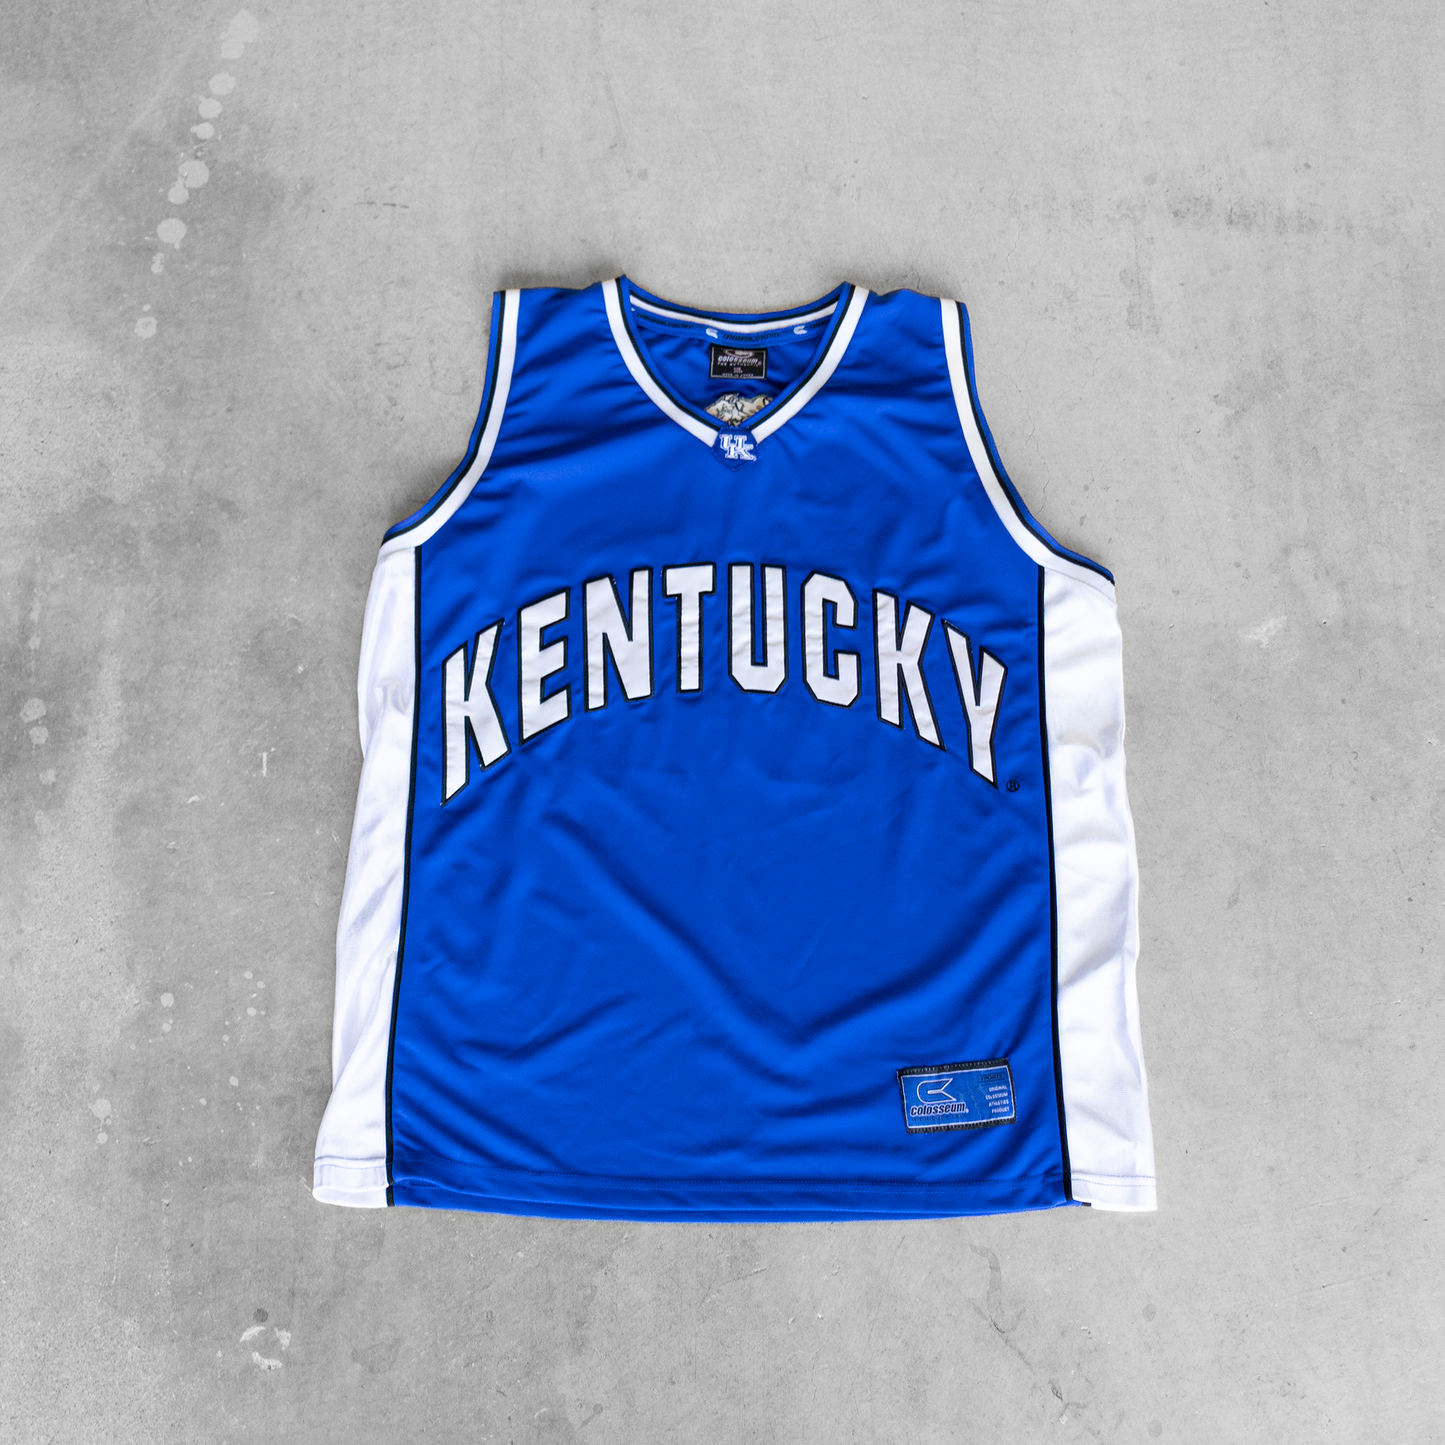 Vintage University Of Kentucky #50 Player's Basketball Jersey (XL)